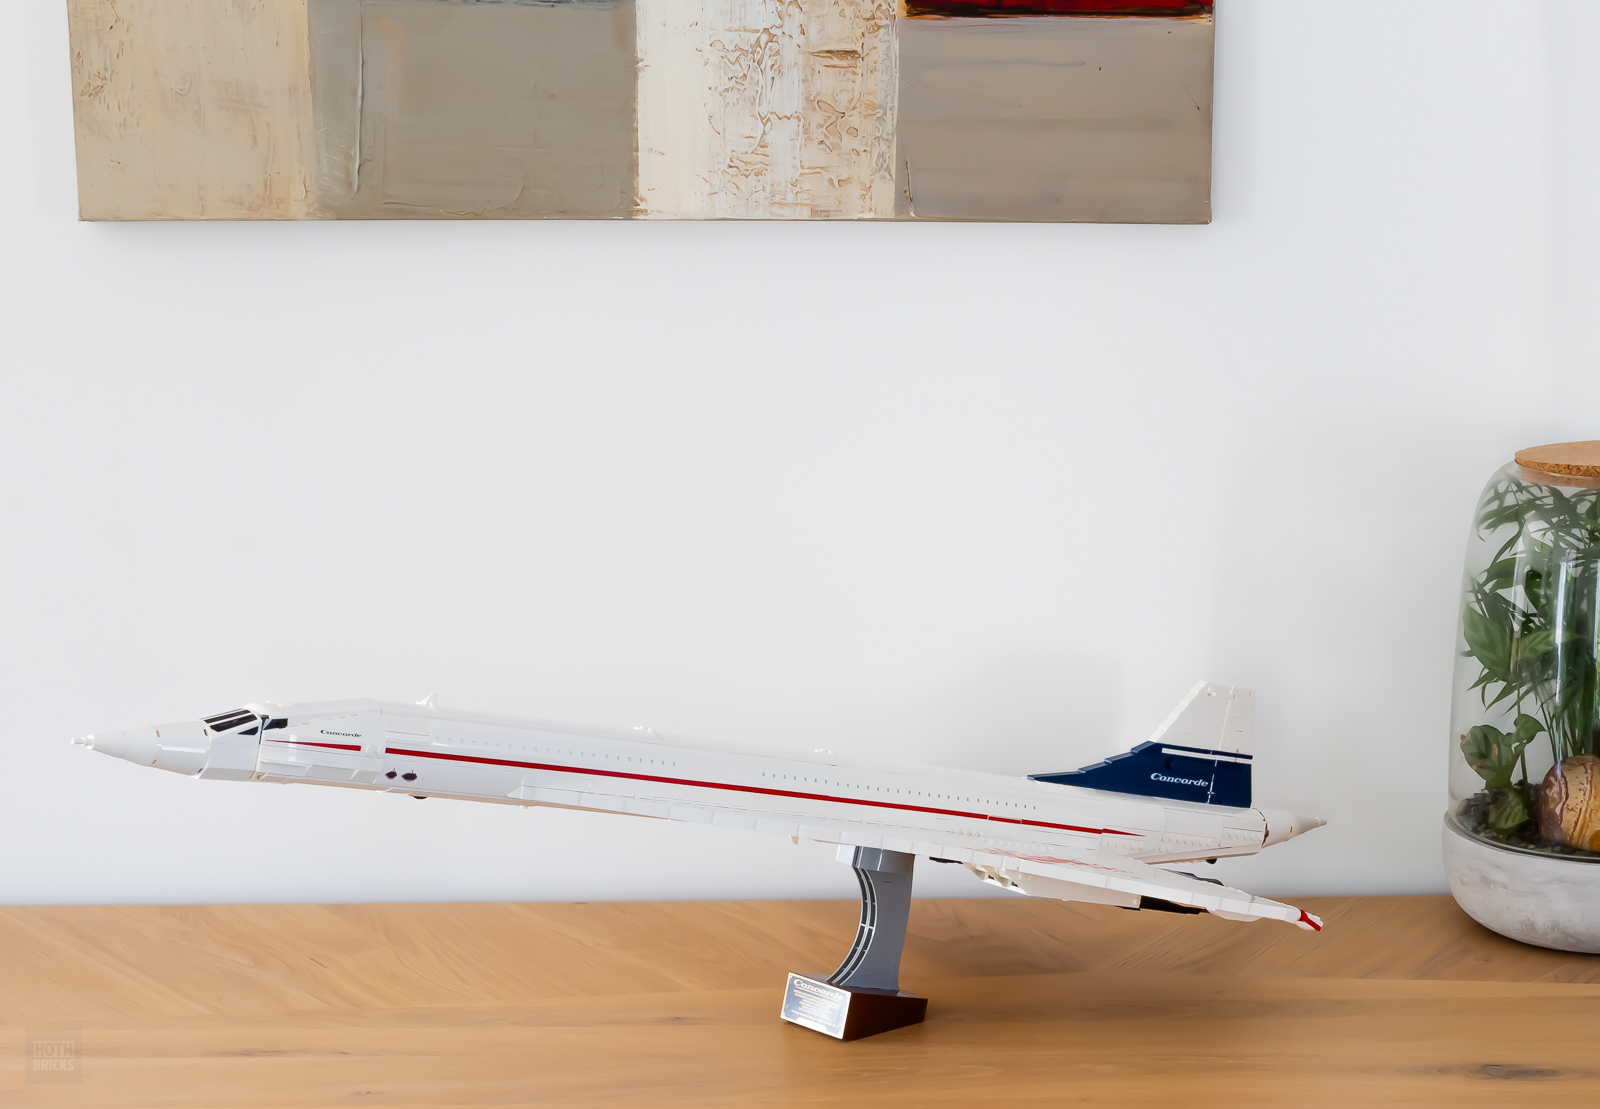 Lego Icons Concorde Model Plane Building Set 10318 : Target